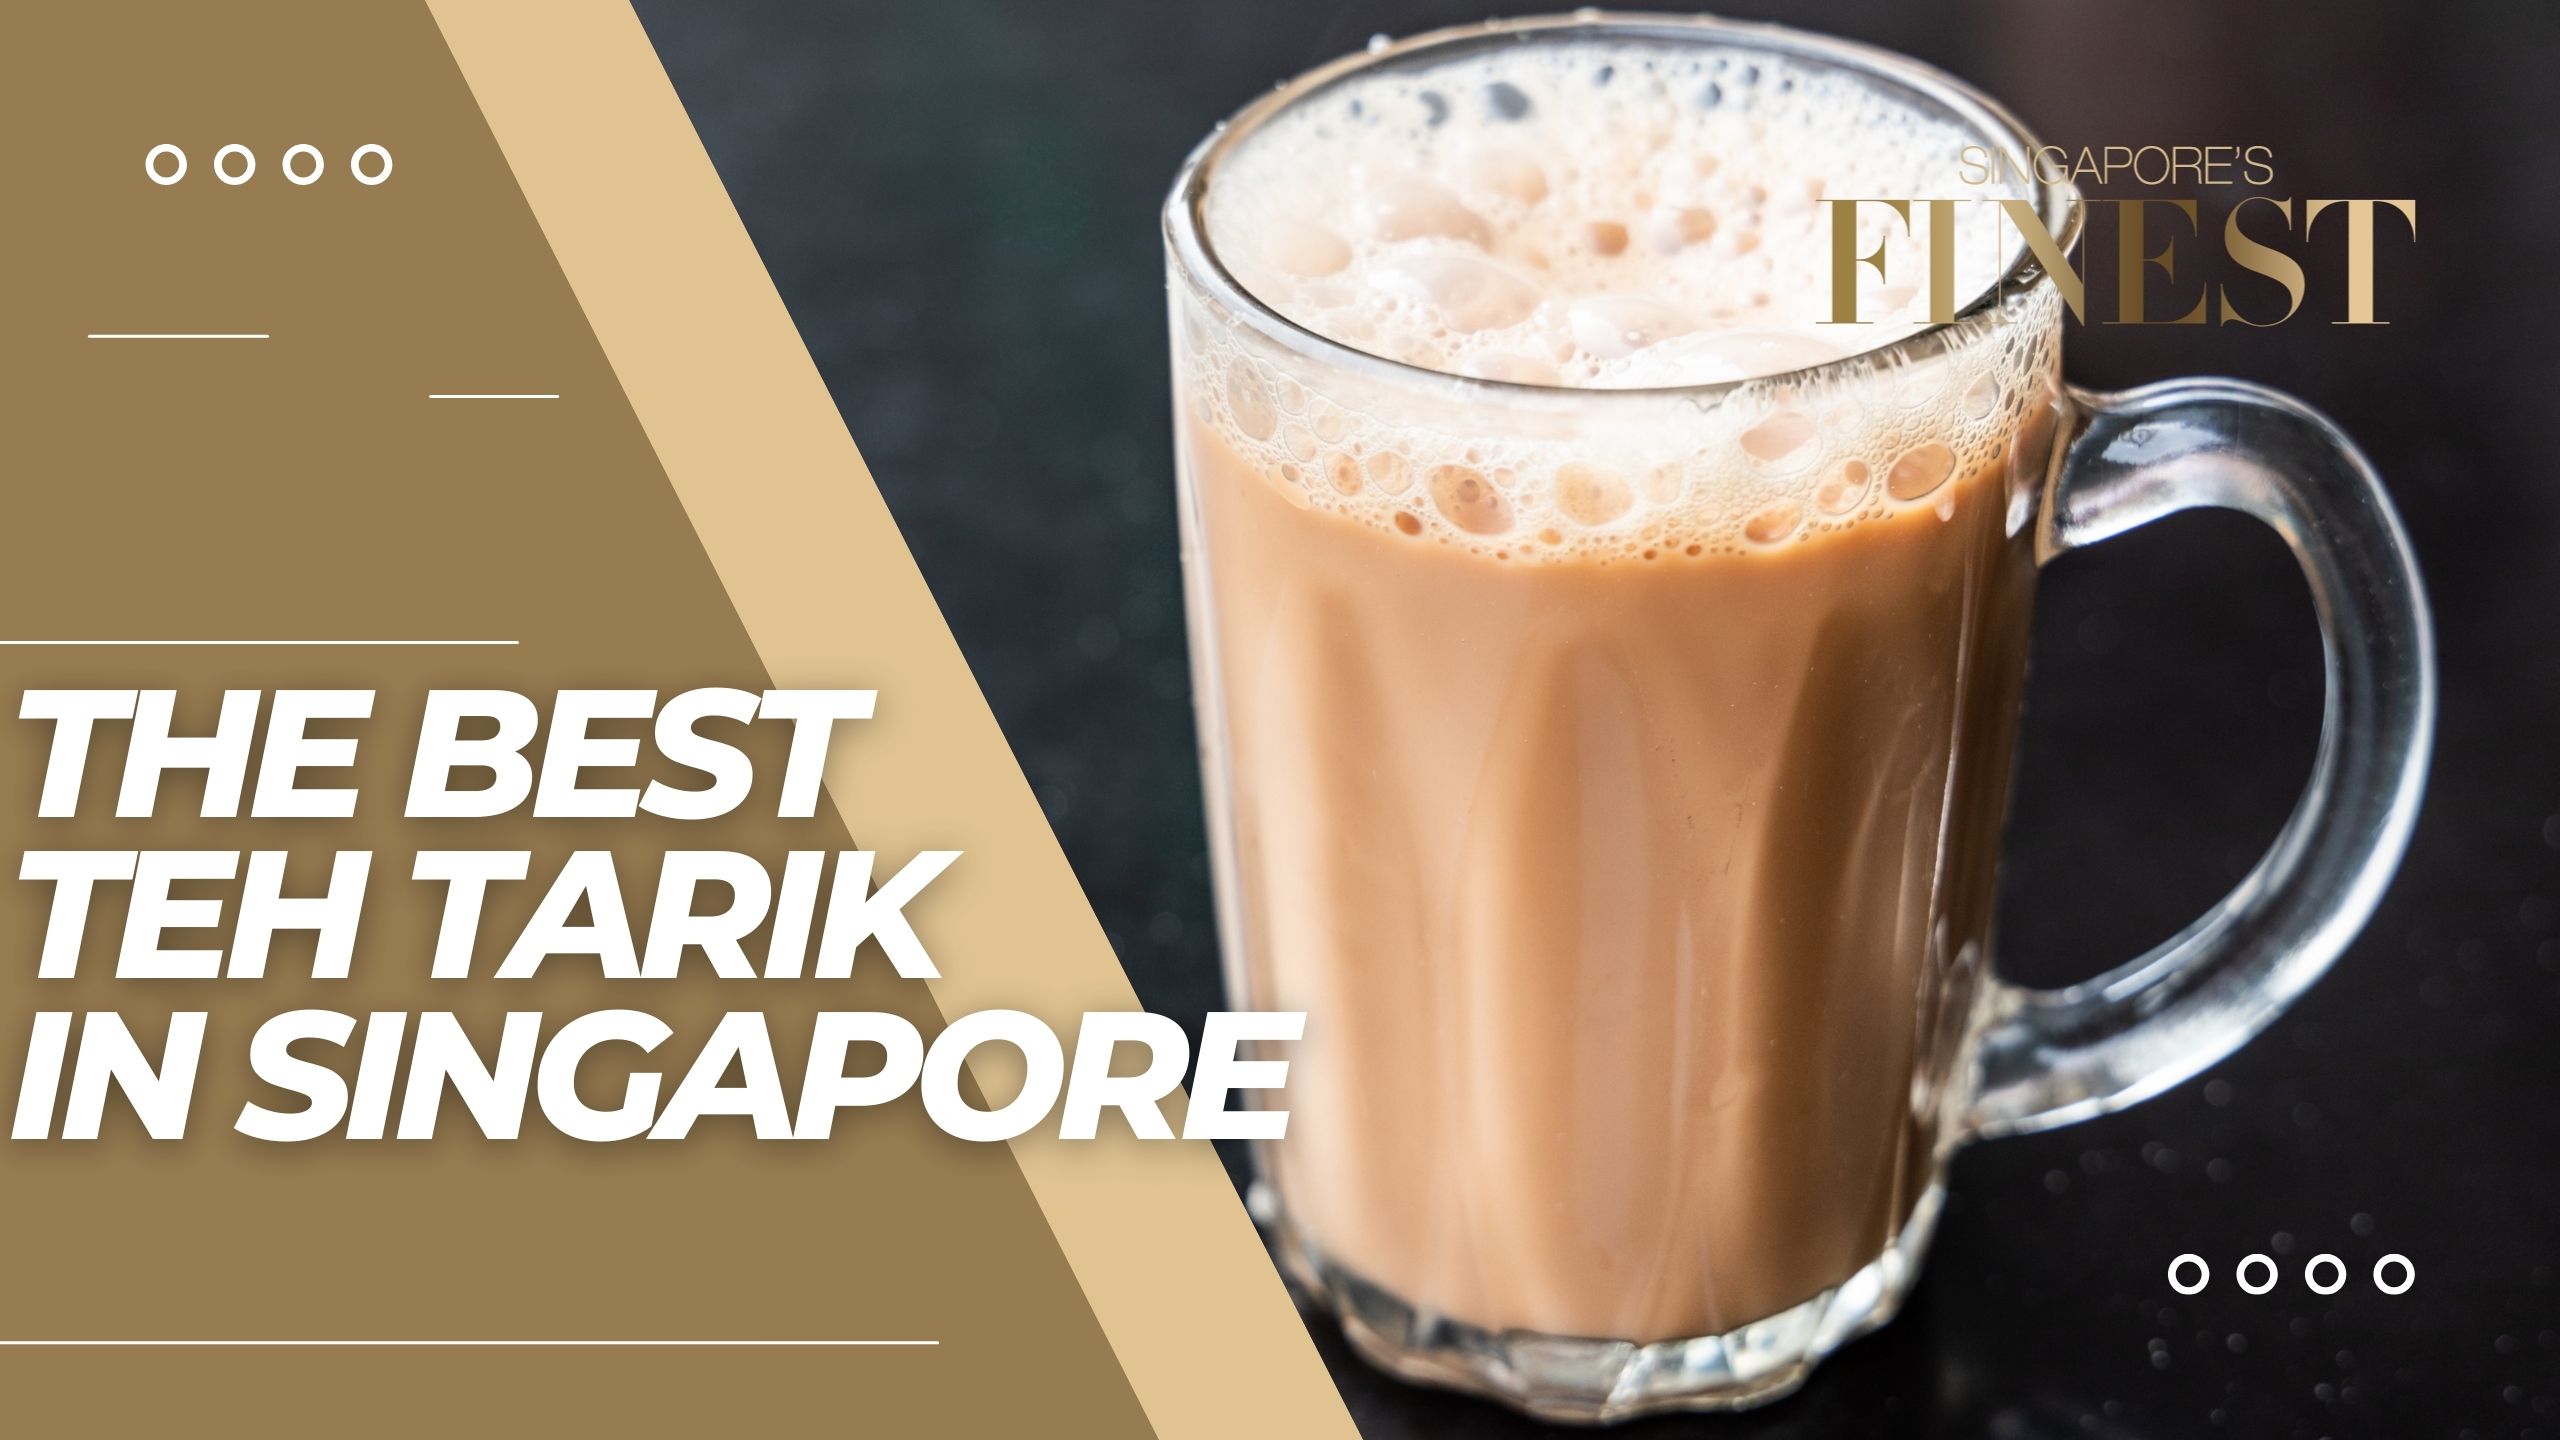 The Finest Teh Tarik in Singapore